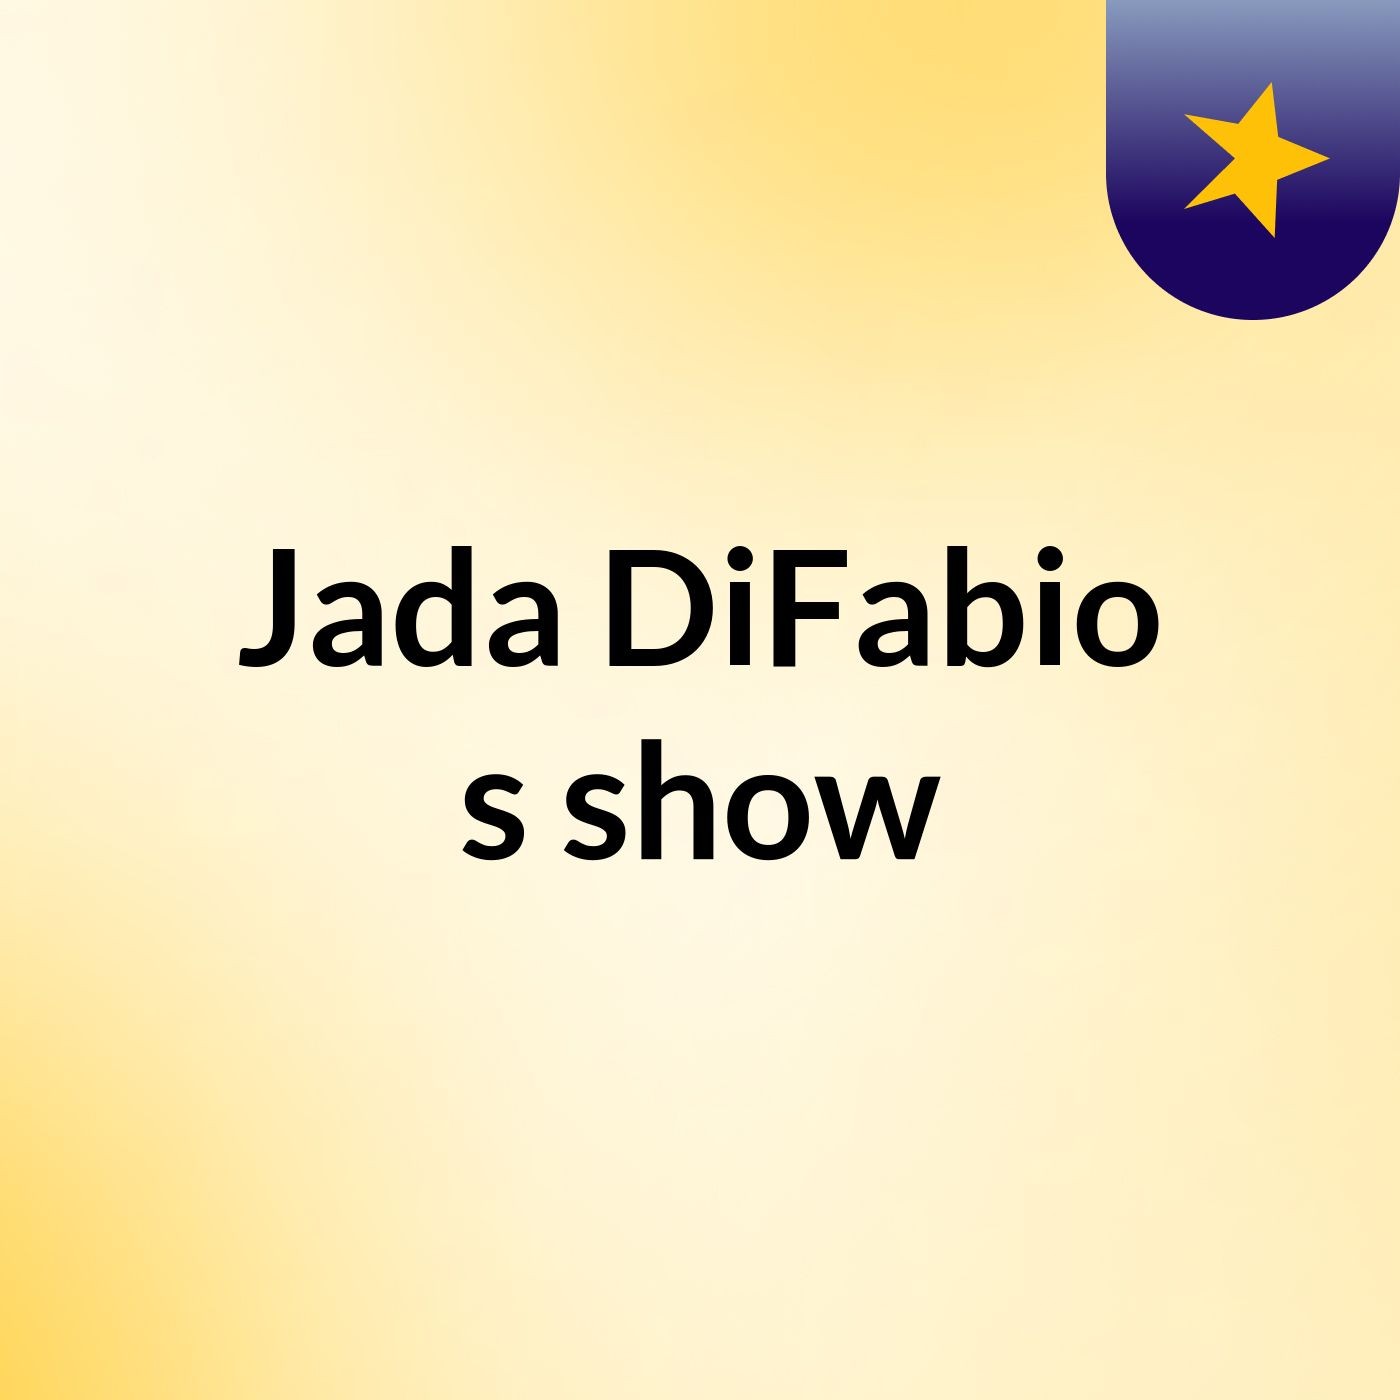 Episode 4 - Jada DiFabio's show